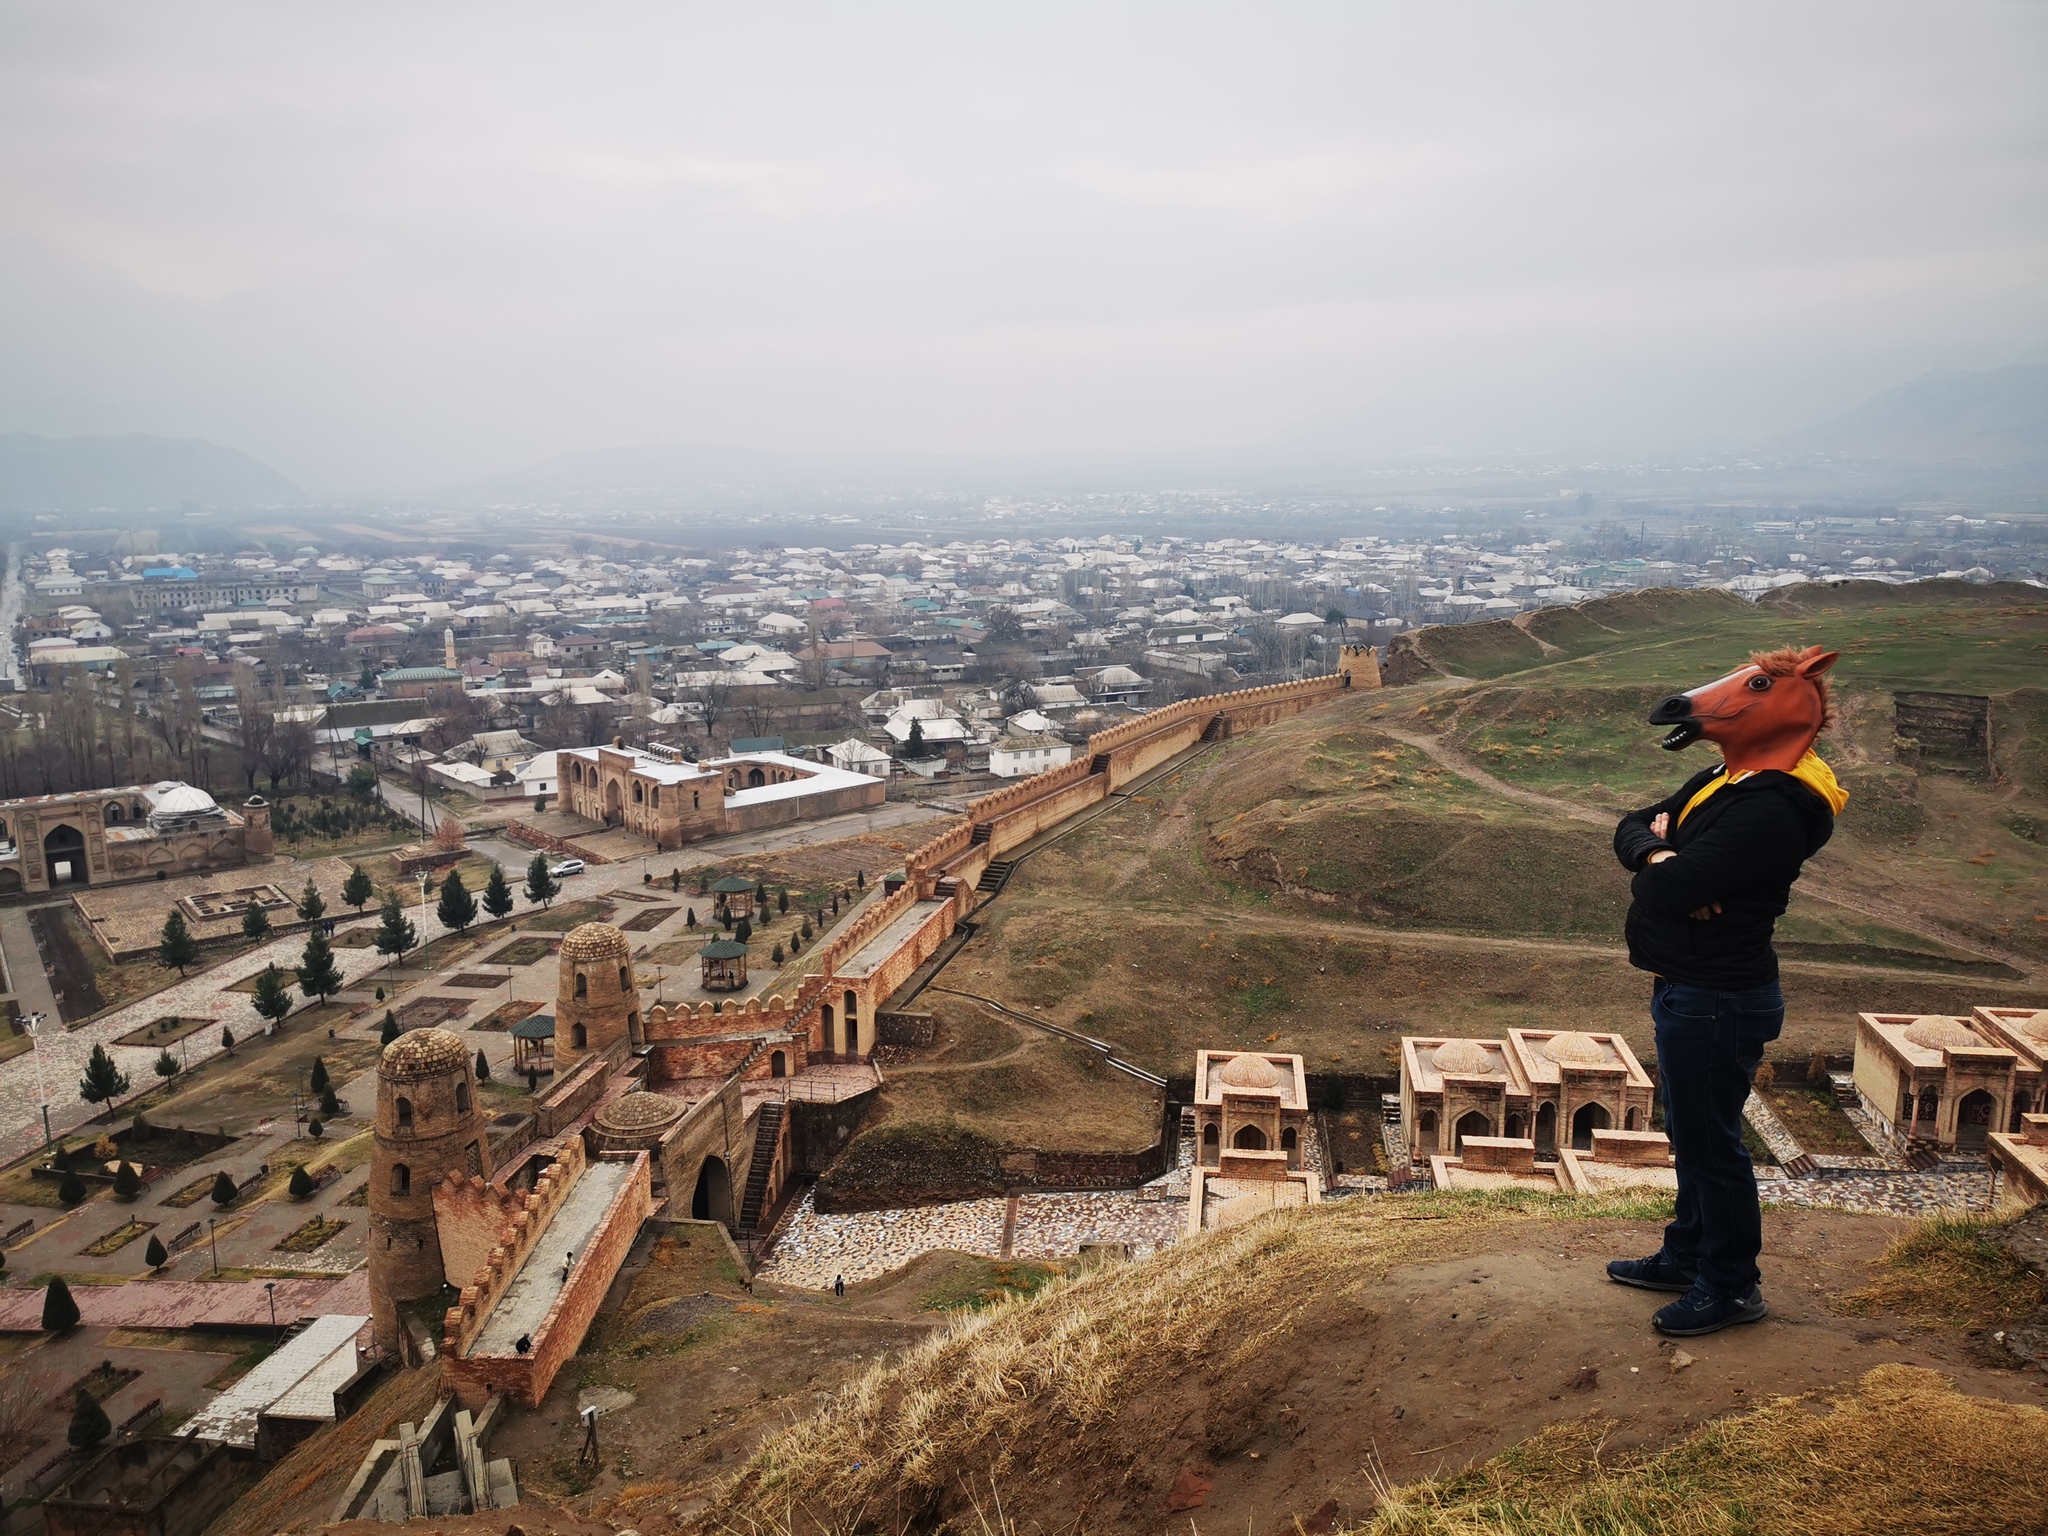 Wandering around the city alone - Dushanbe - My, Travels, Budget travel, Longpost